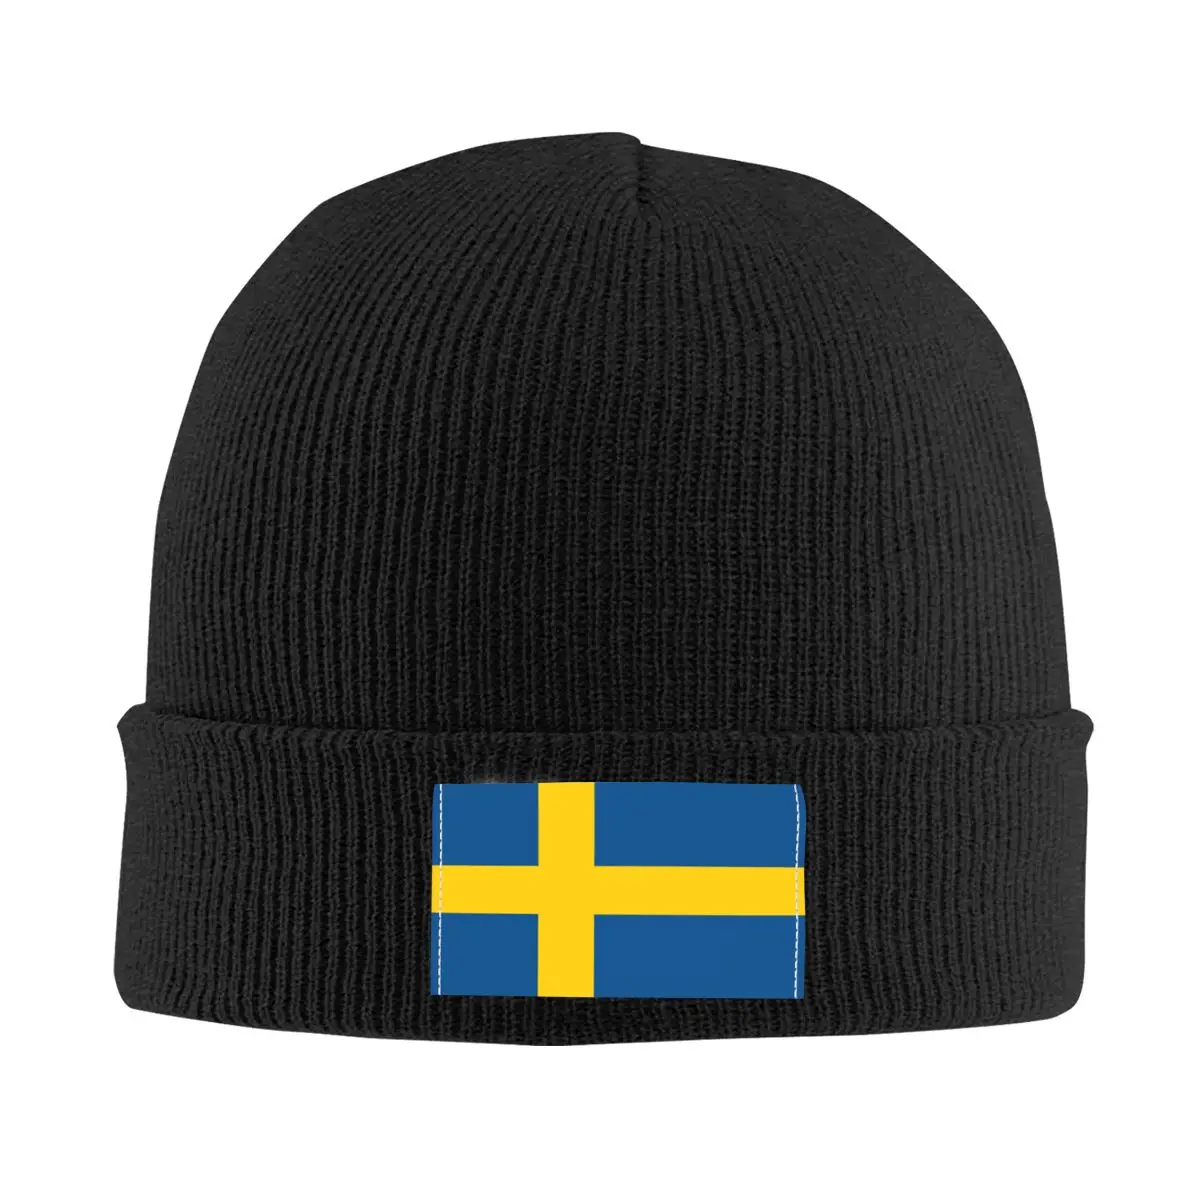 Sweden Flag Bonnet Hats Hip Hop Knitted Hat For Men Women Warm Winter Skullies Beanies Caps 1